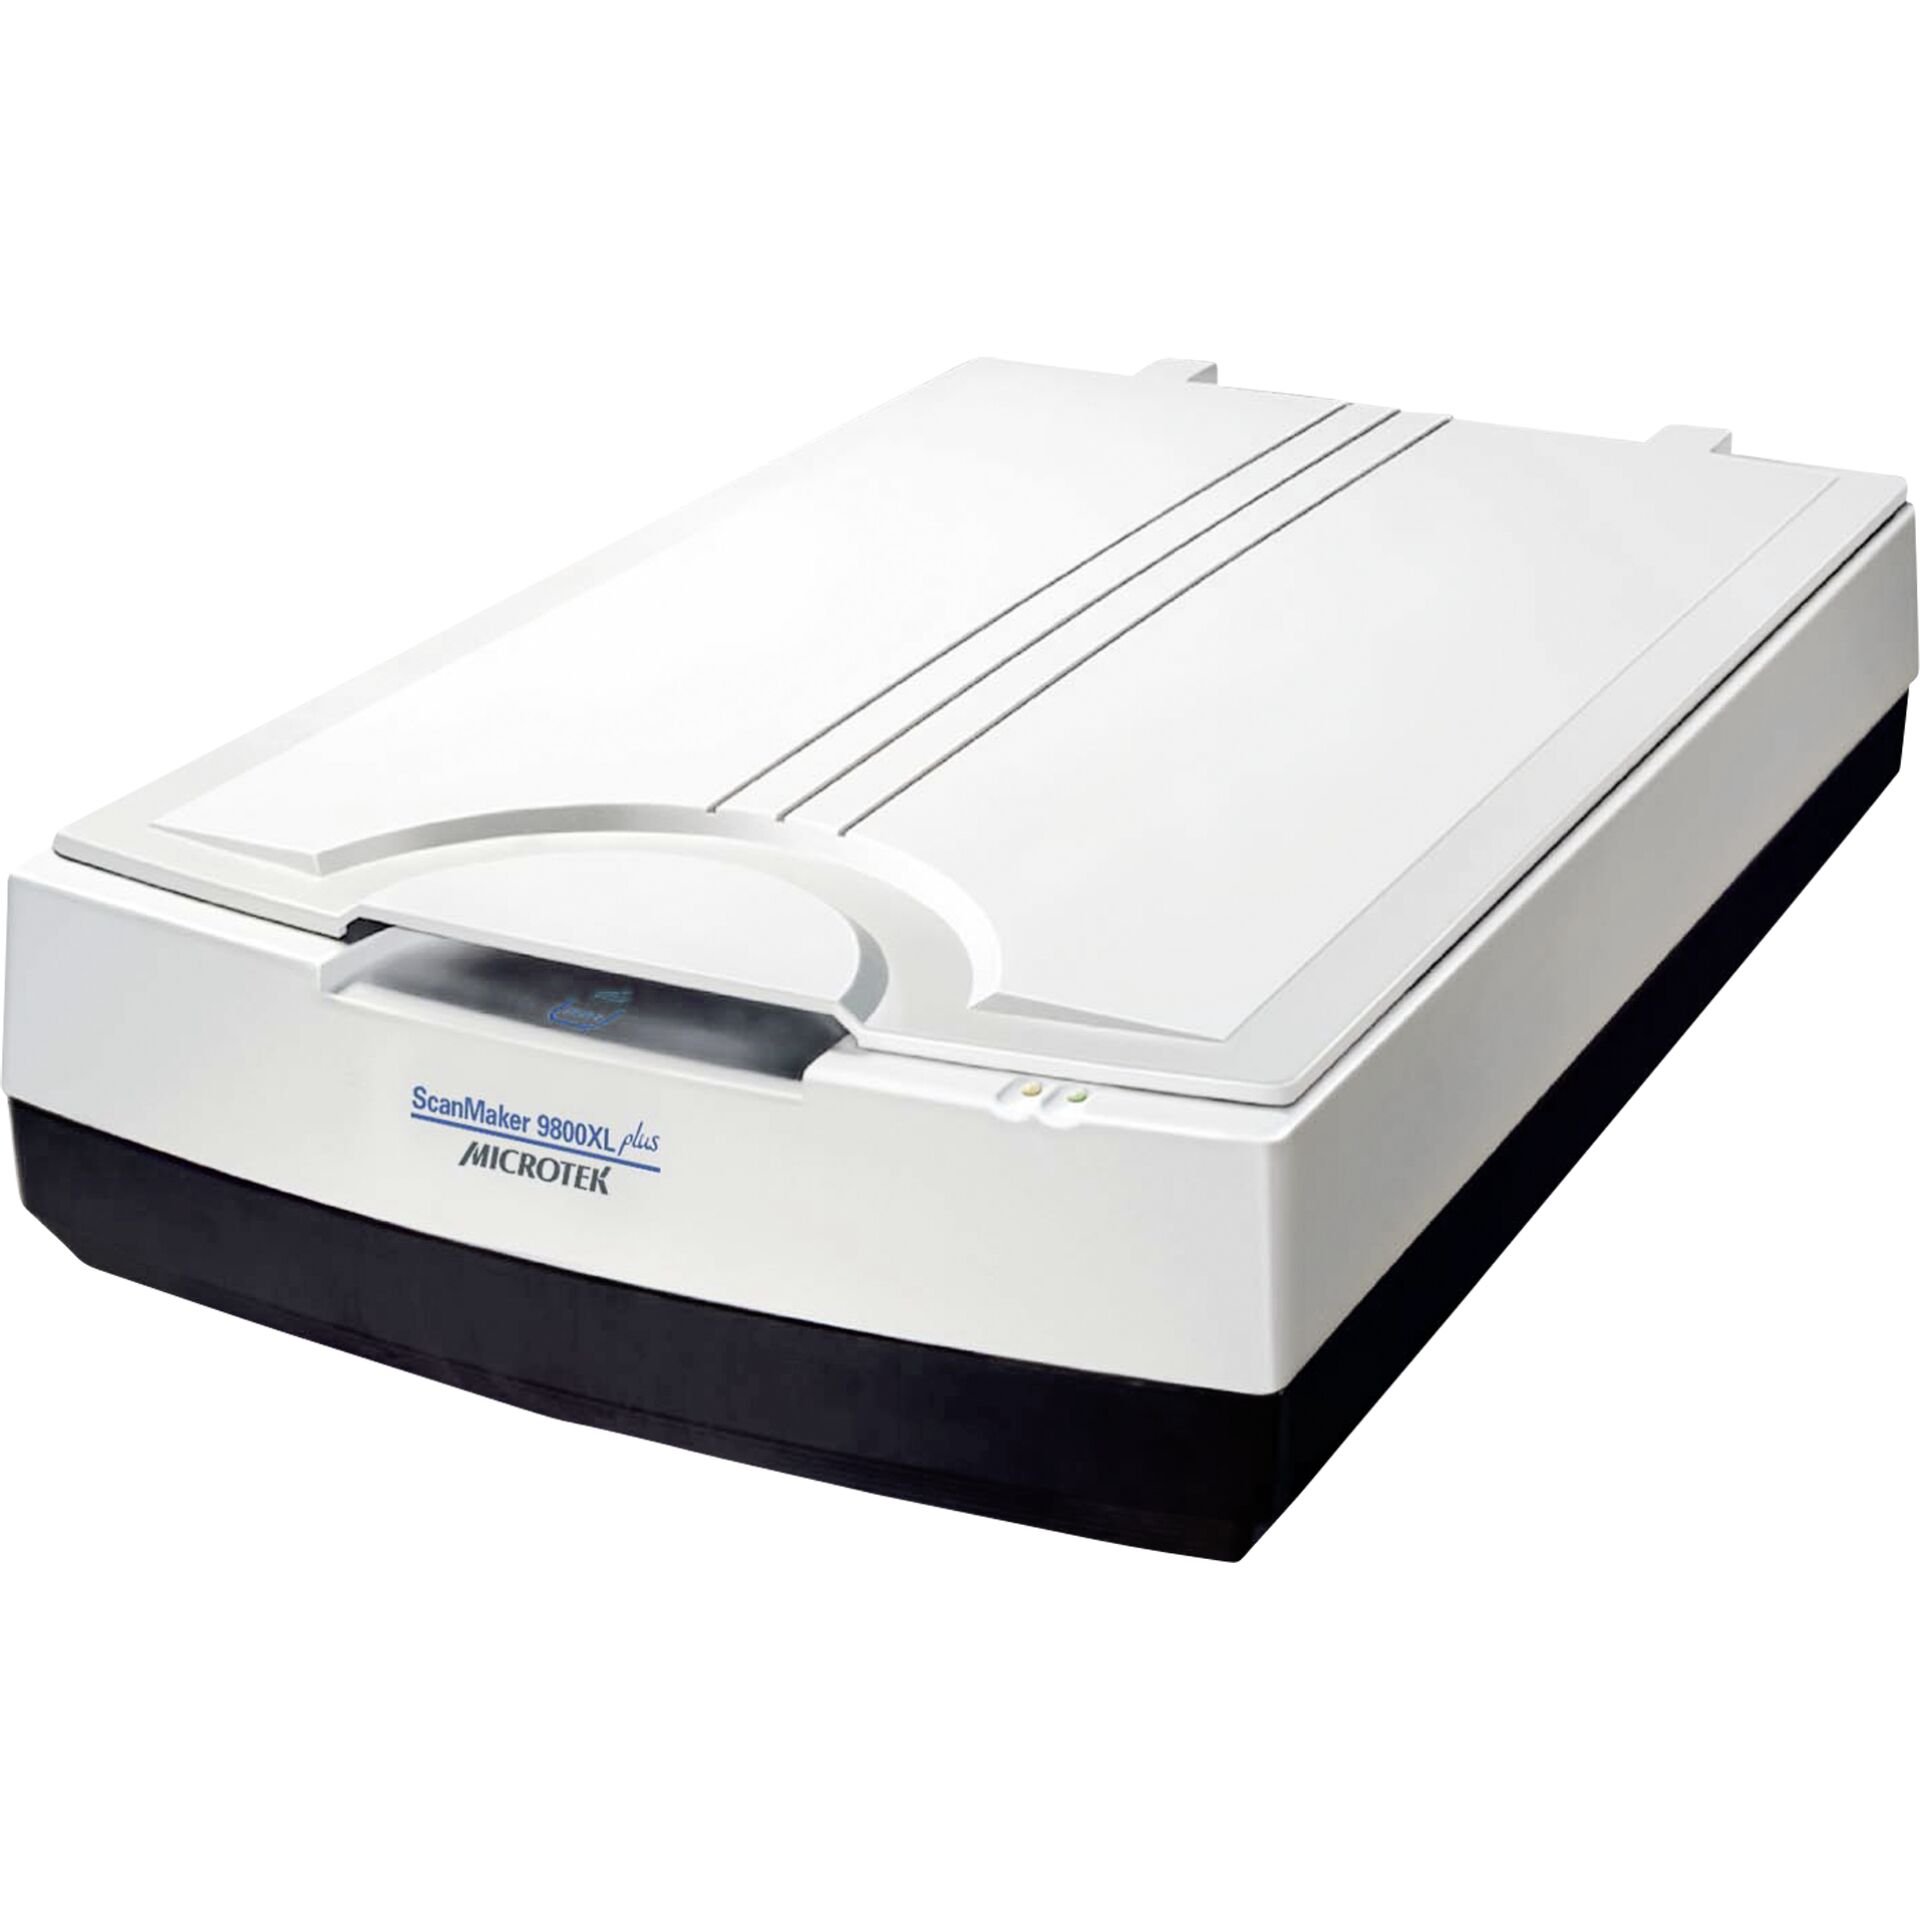 Microtek ScanMaker 9800XL Plus Silver  Scanner 